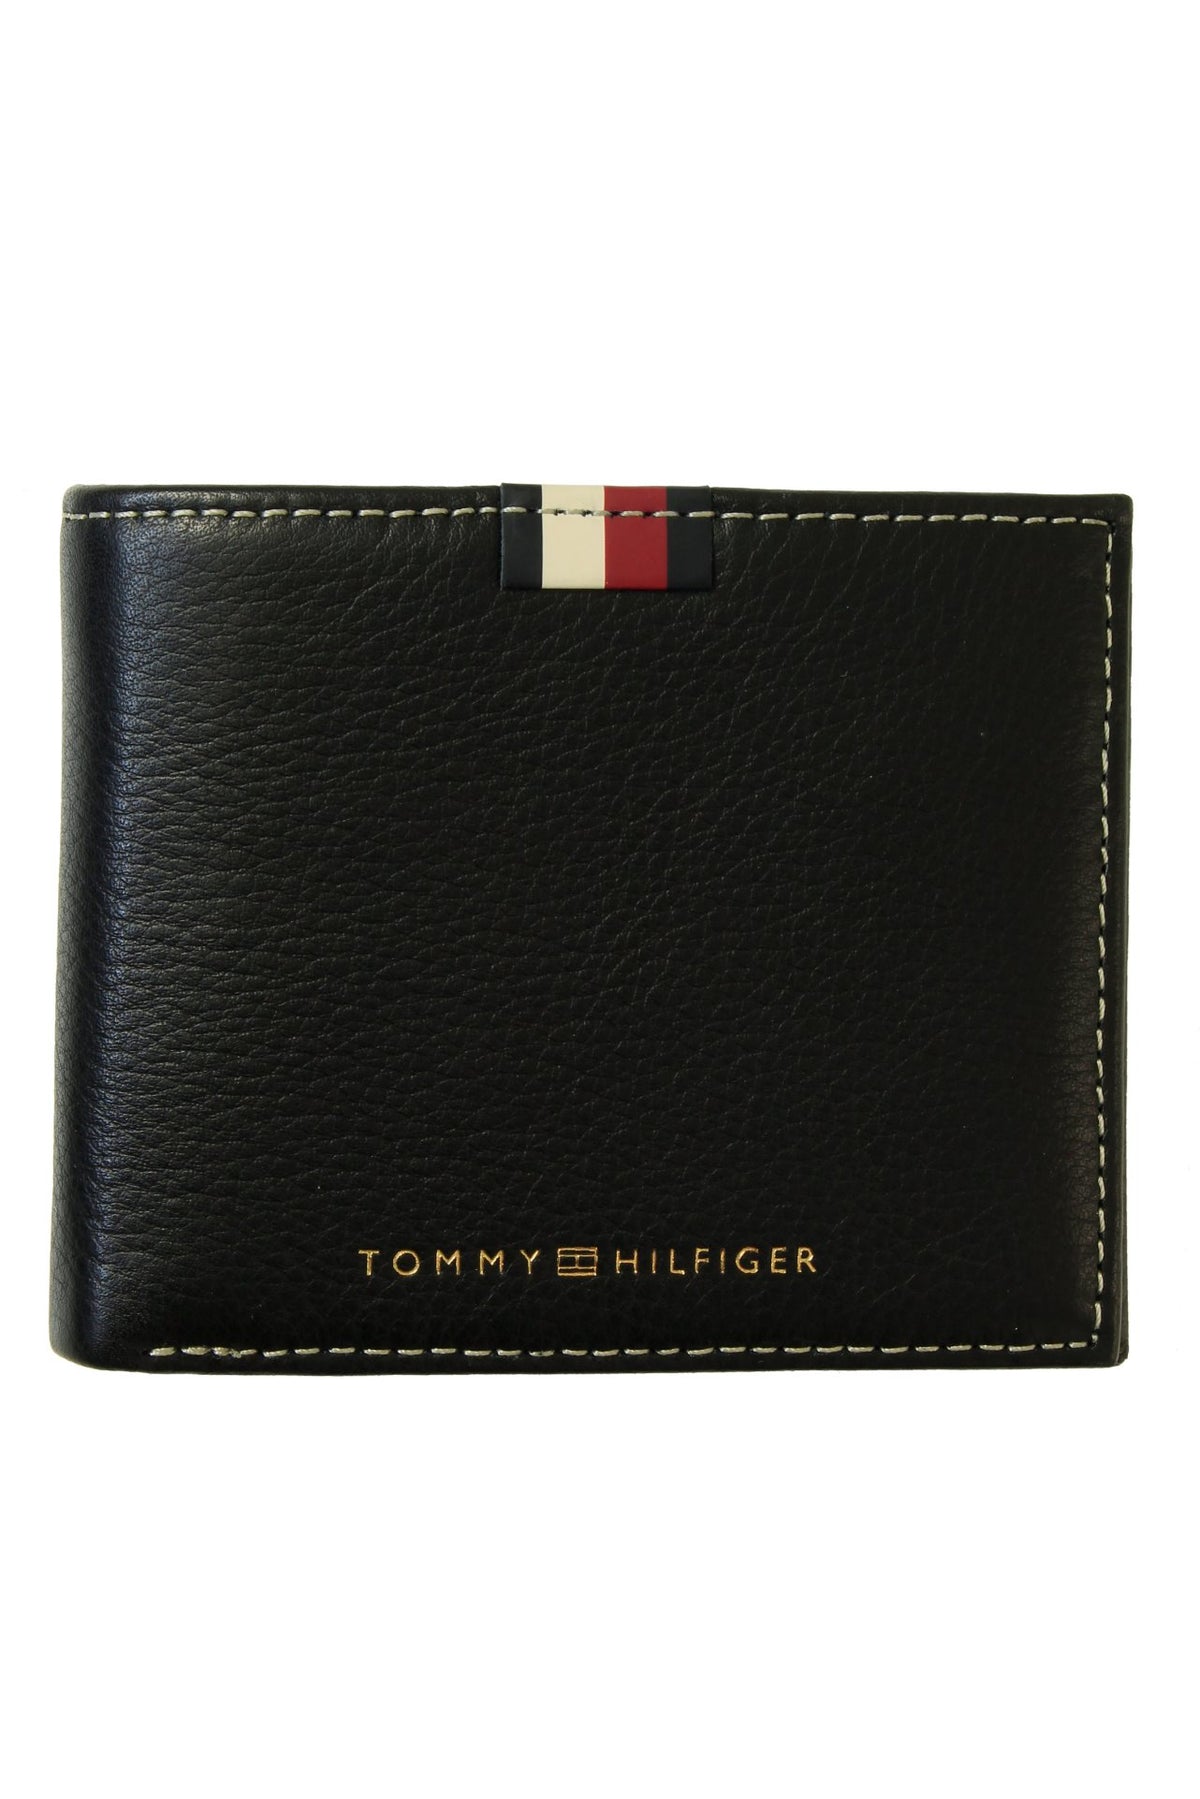 Tommy Hilfiger 'Corporate' Mini Credit Card Wallet, 01, Am0Am11600, Black